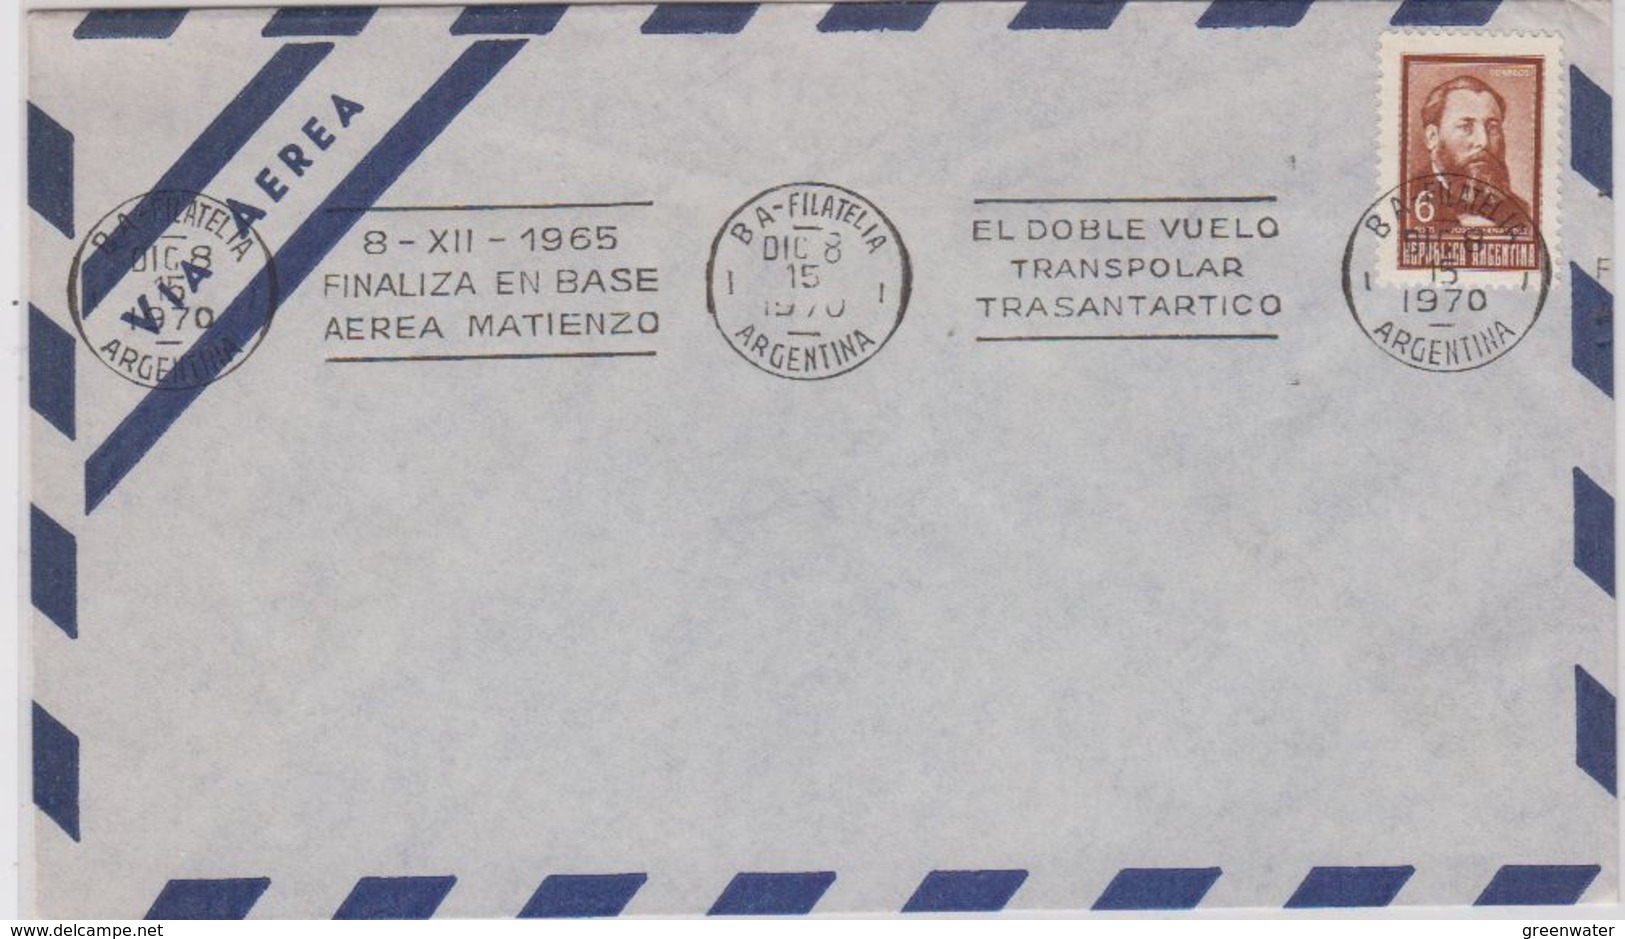 Argentina 1970 Finaliza En Base Aerea Matienzo El Doble Vuelo Transpolar Transantartico Cover Ca 8 Oct 1970 (41271) - Vuelos Polares